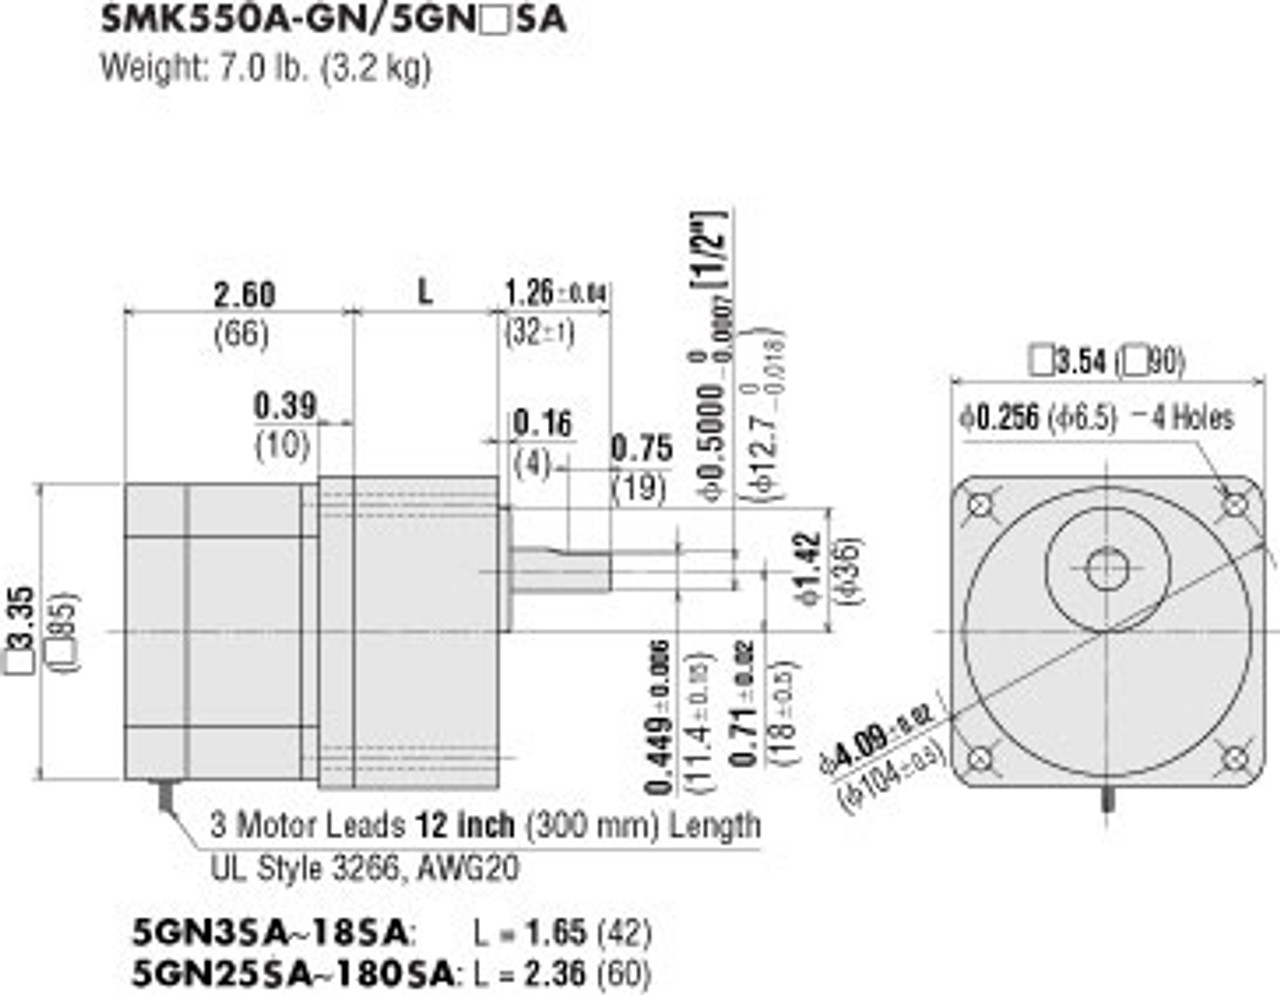 SMK550A-GN / 5GN100SA - Dimensions